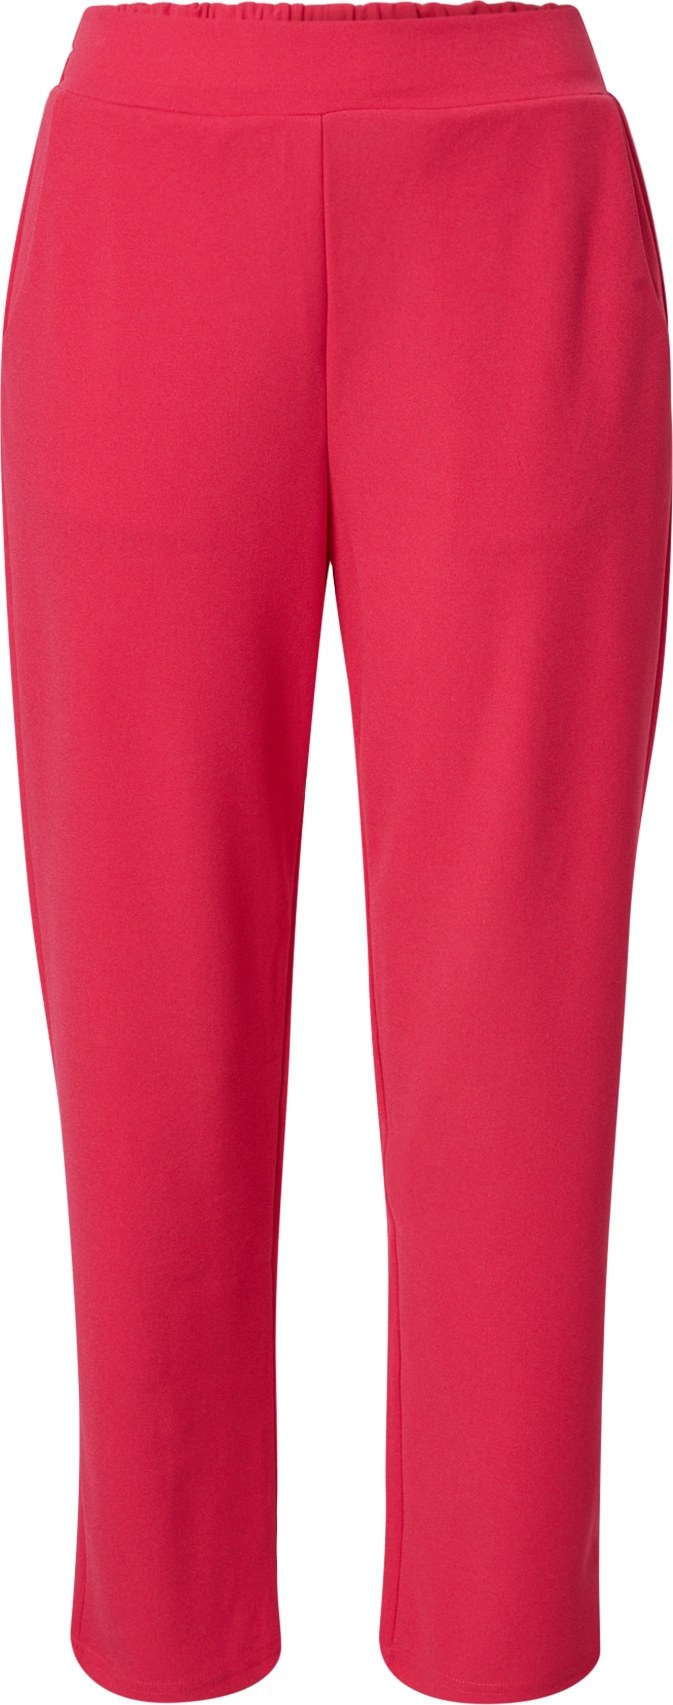 NEW LOOK Kalhoty 'SCUBA' pink